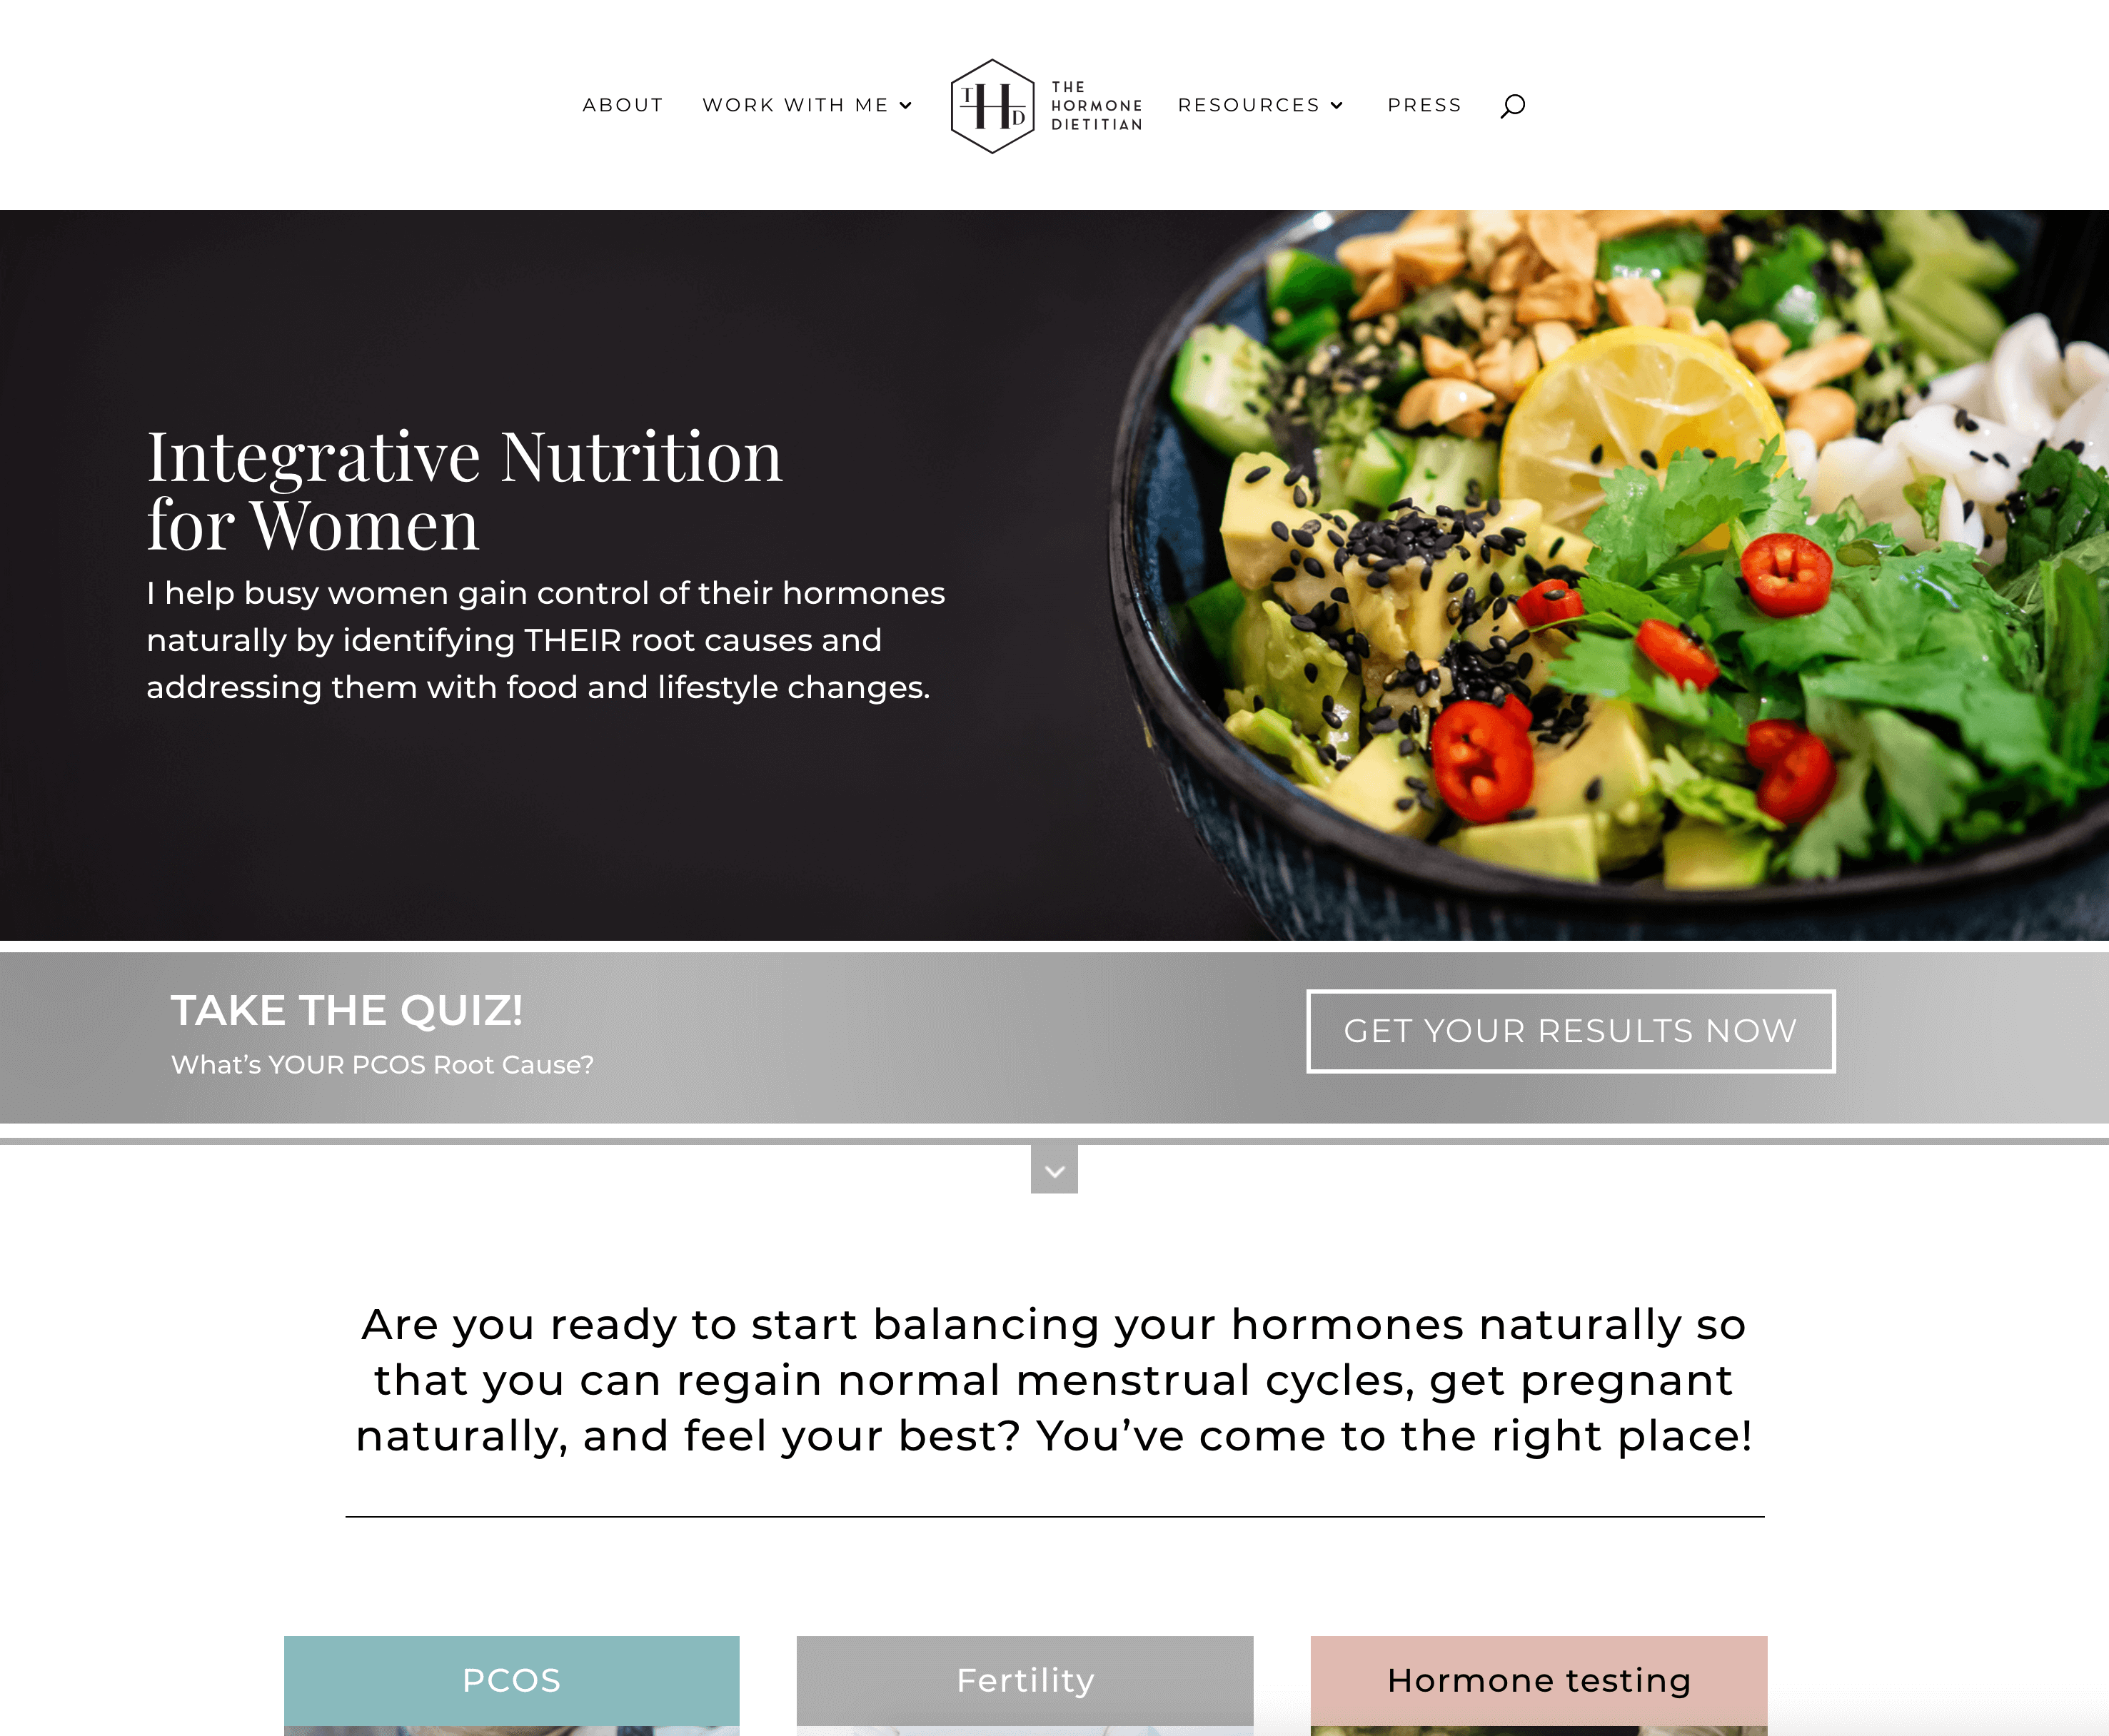 Dietitian website